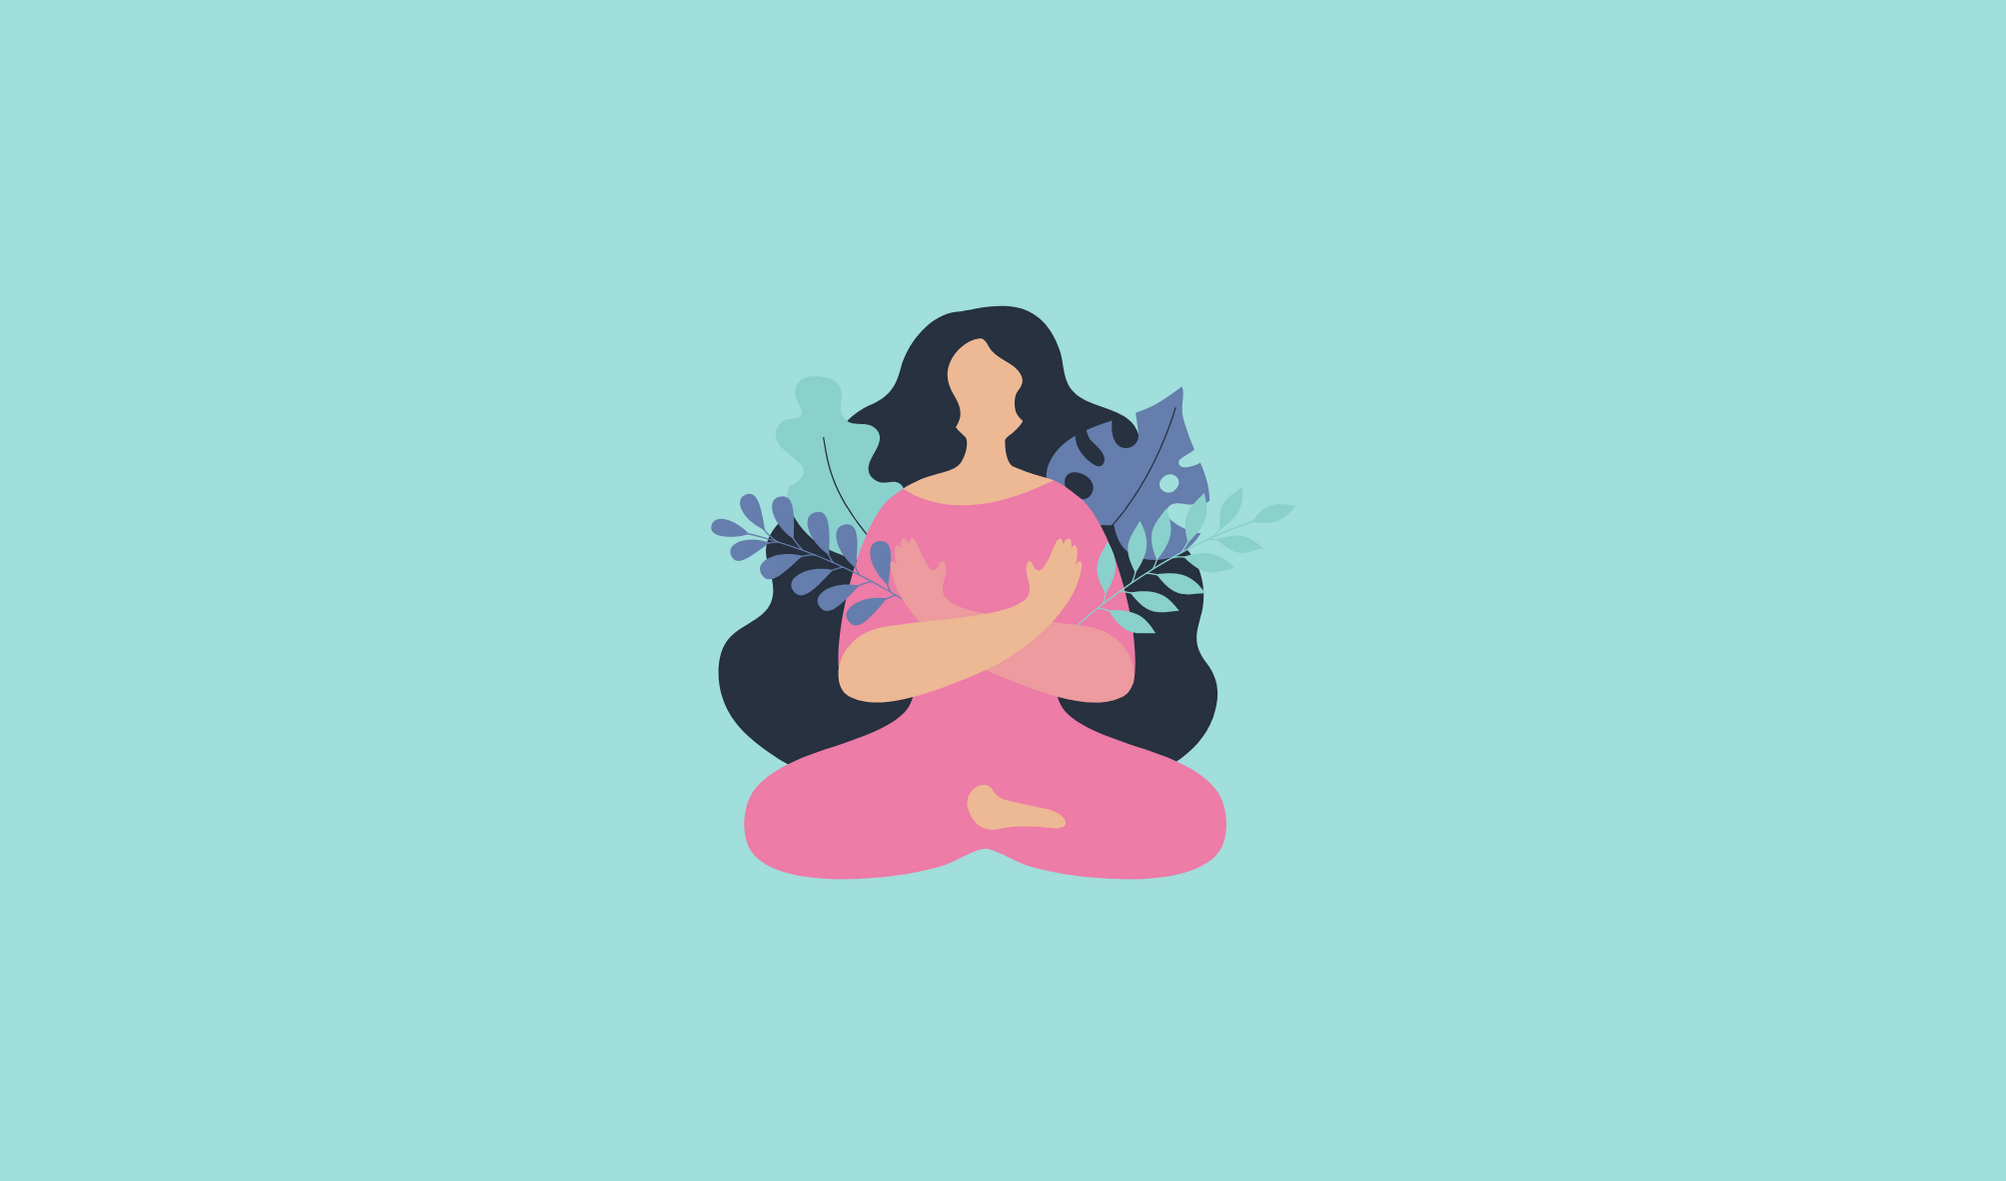 Mindfulness Based Stress Reduction - Kalpalatha Thiyagarajan Kalm Wellness Centre and Counselling Services